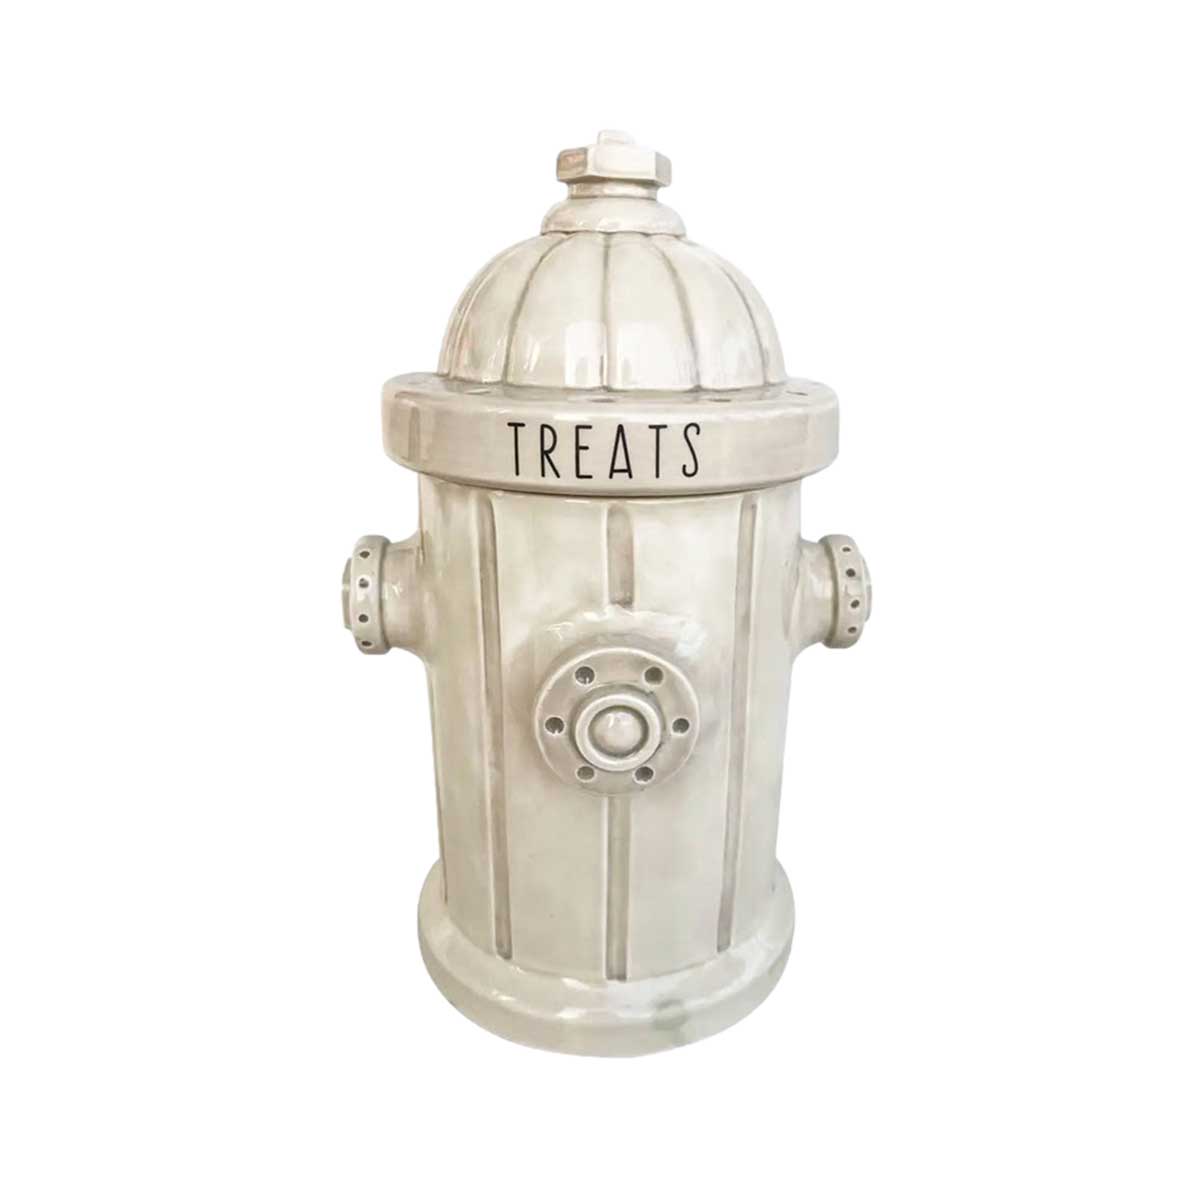 Fire Hydrant Treat Jar - Antique White | Pawlicious & Company